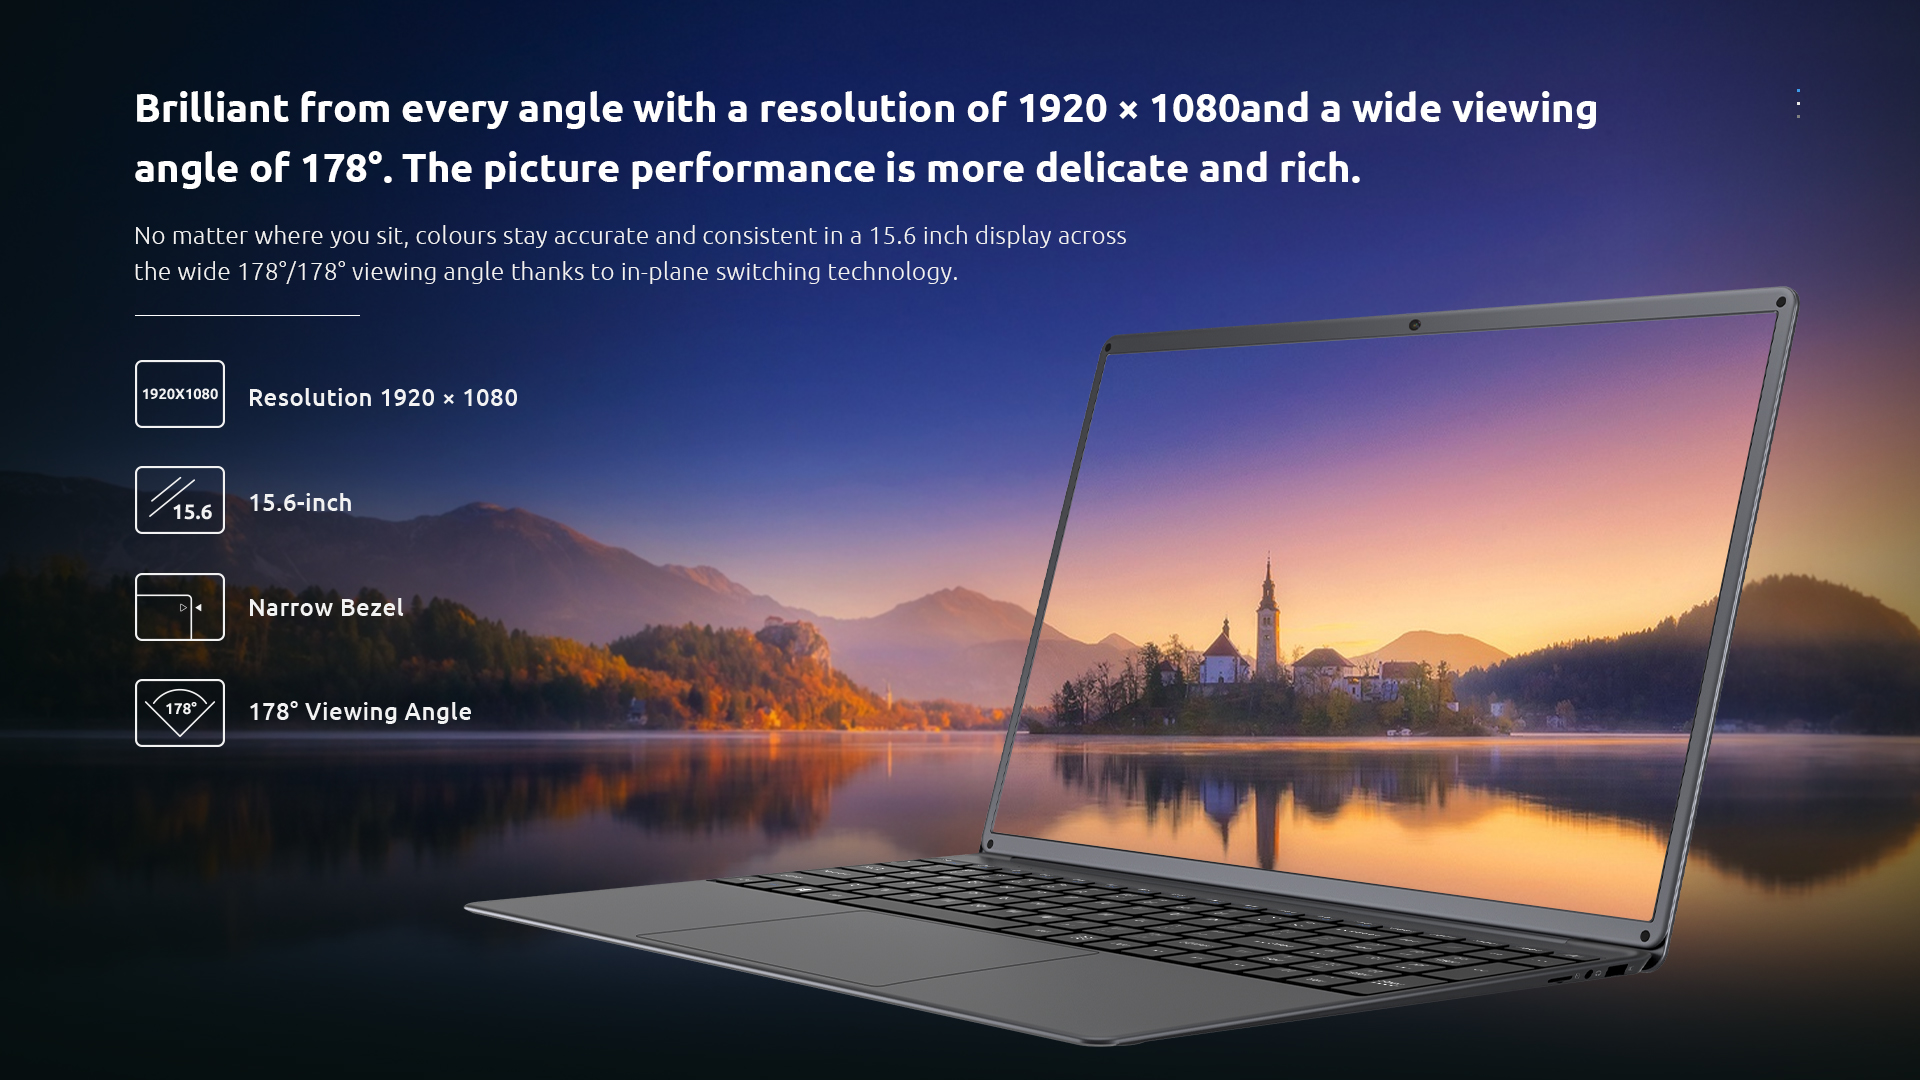 BMAX S15 Laptop 15.6 inch Intel Gemini Lake N4100 Intel UHD Graphics 600 8GB LPDDR4 RAM 128GB SSD 178° Viewing Angle Narrow Bezel Notebook 9